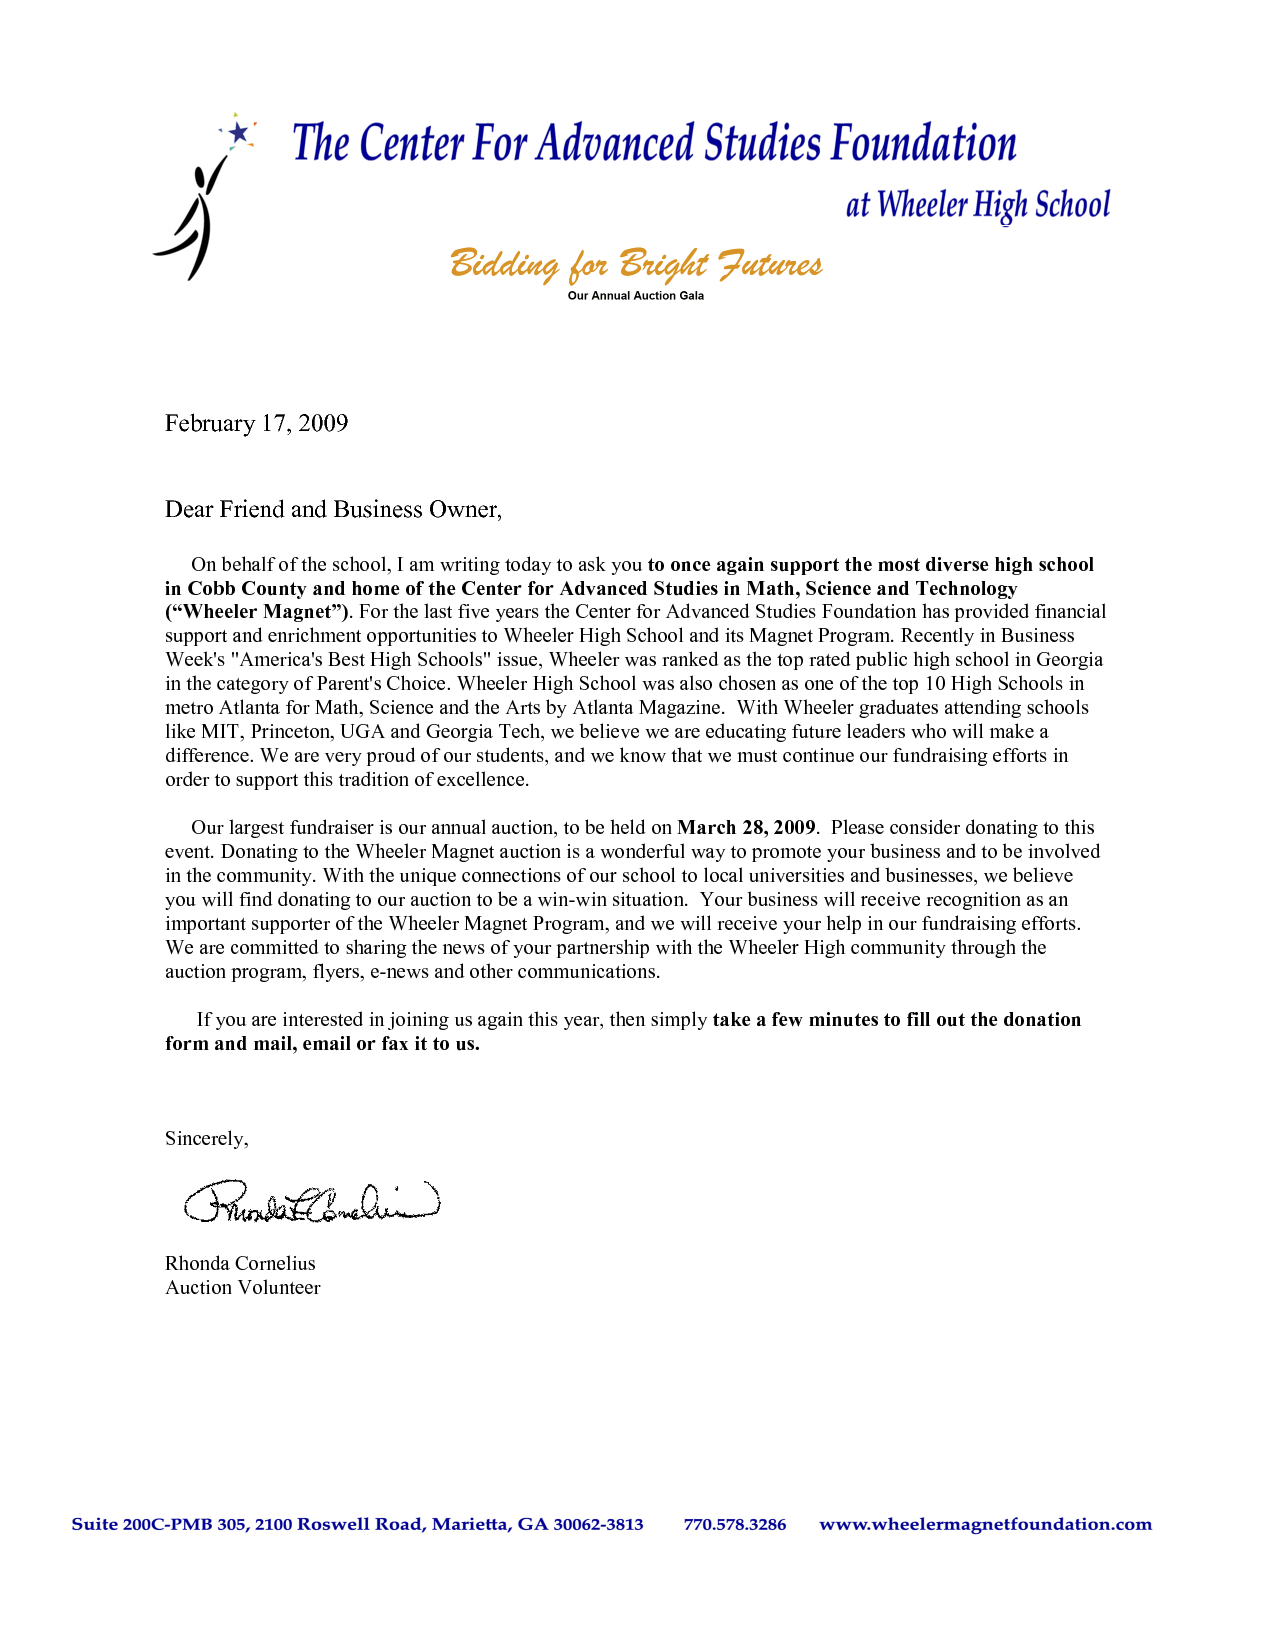 Sample Donation Request Letter For School Targer Golden Dragon 